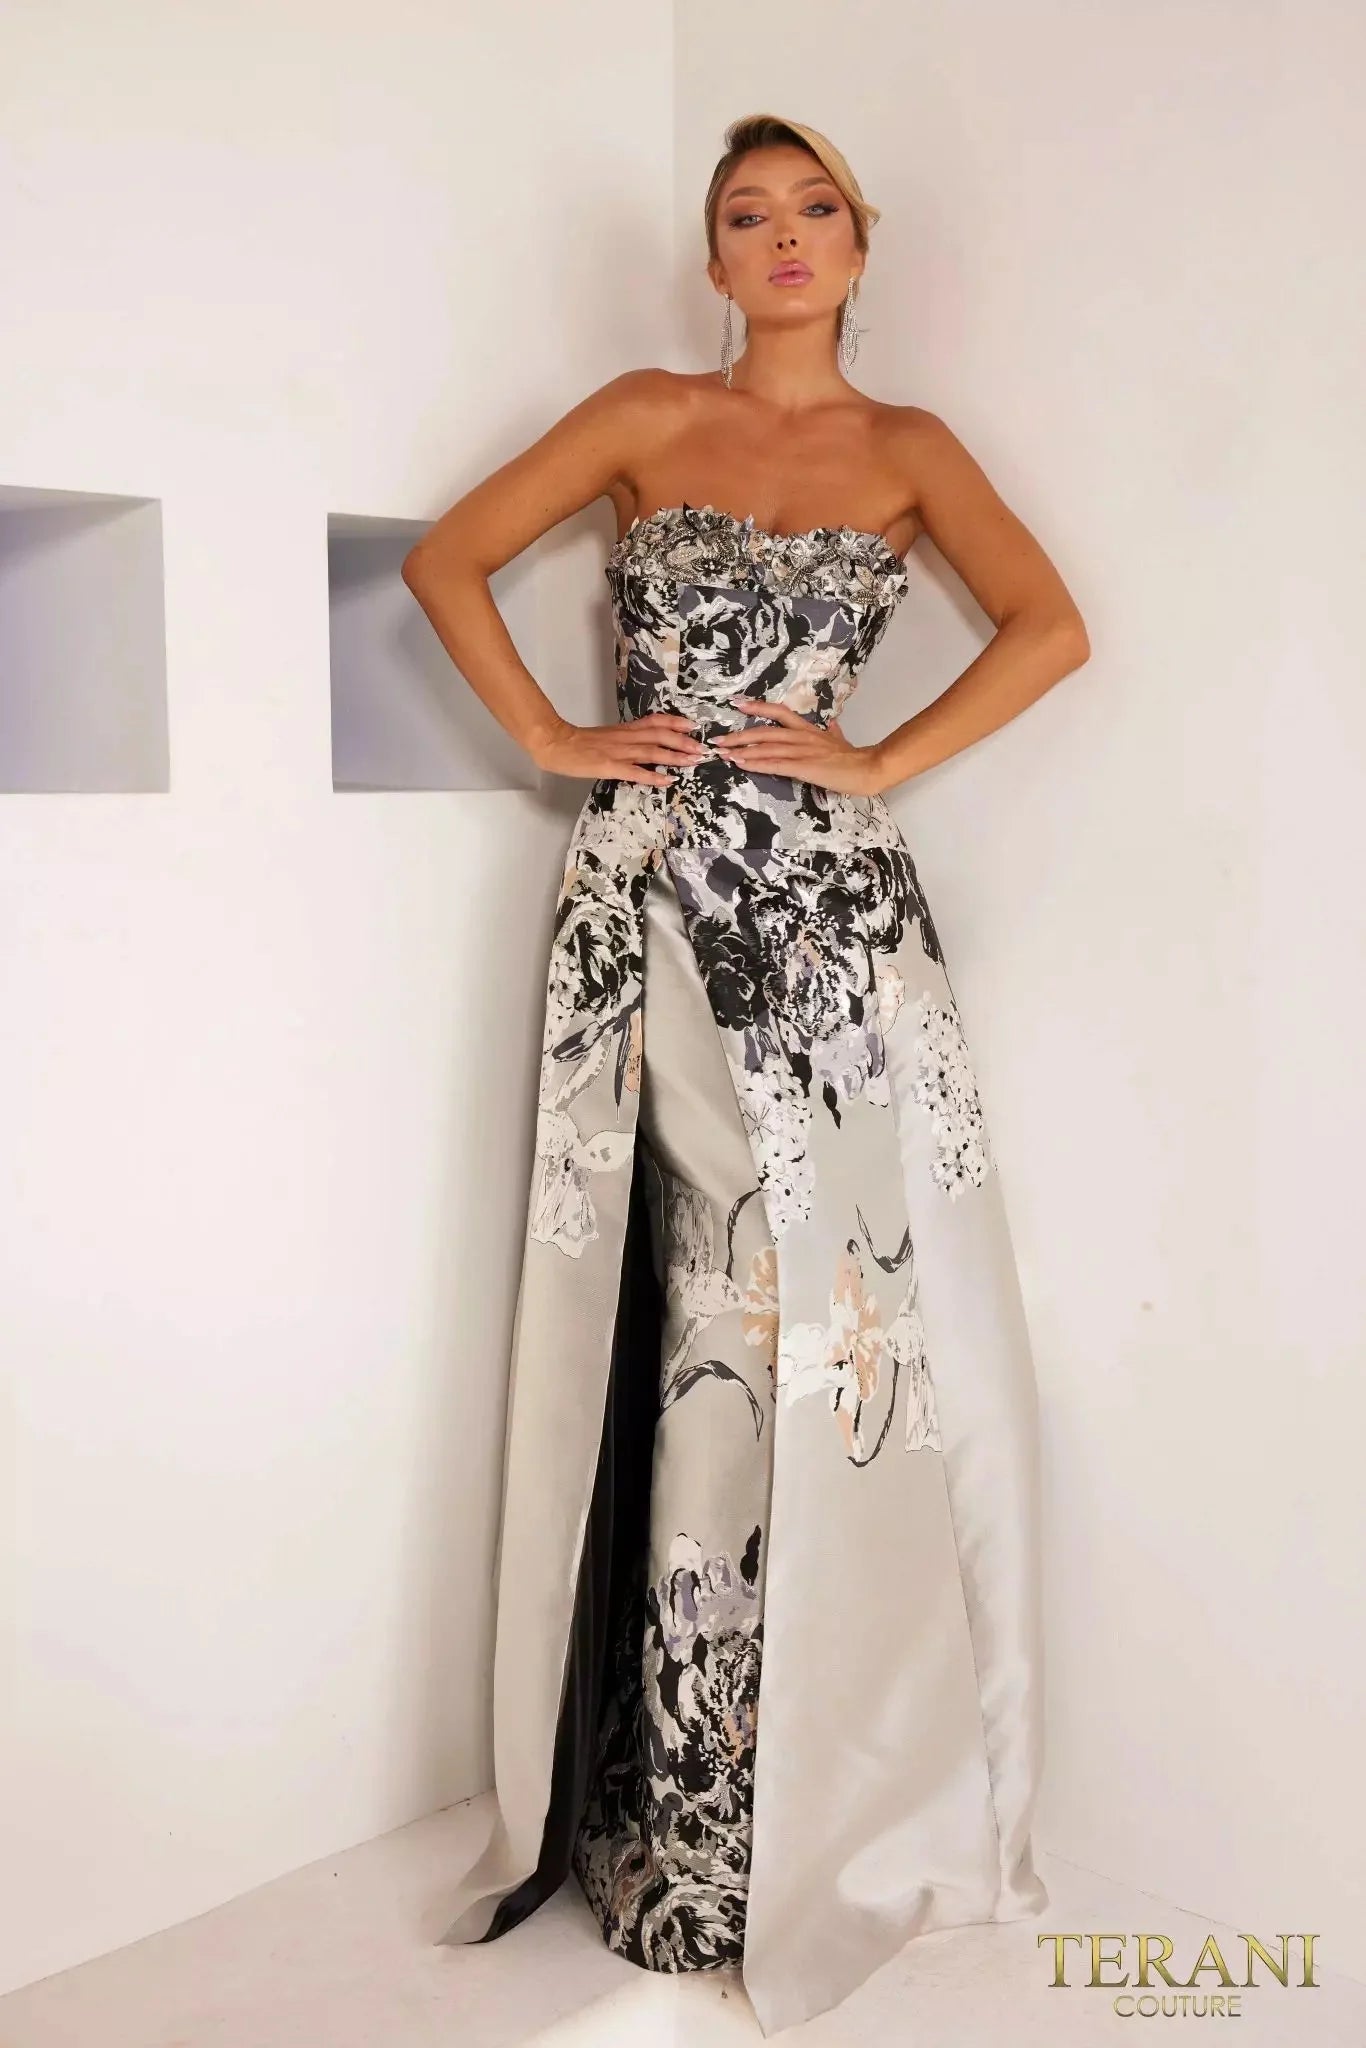 Terani Couture 241E2452 - Strapless Jacquard Ballgown Special Occasion Dress